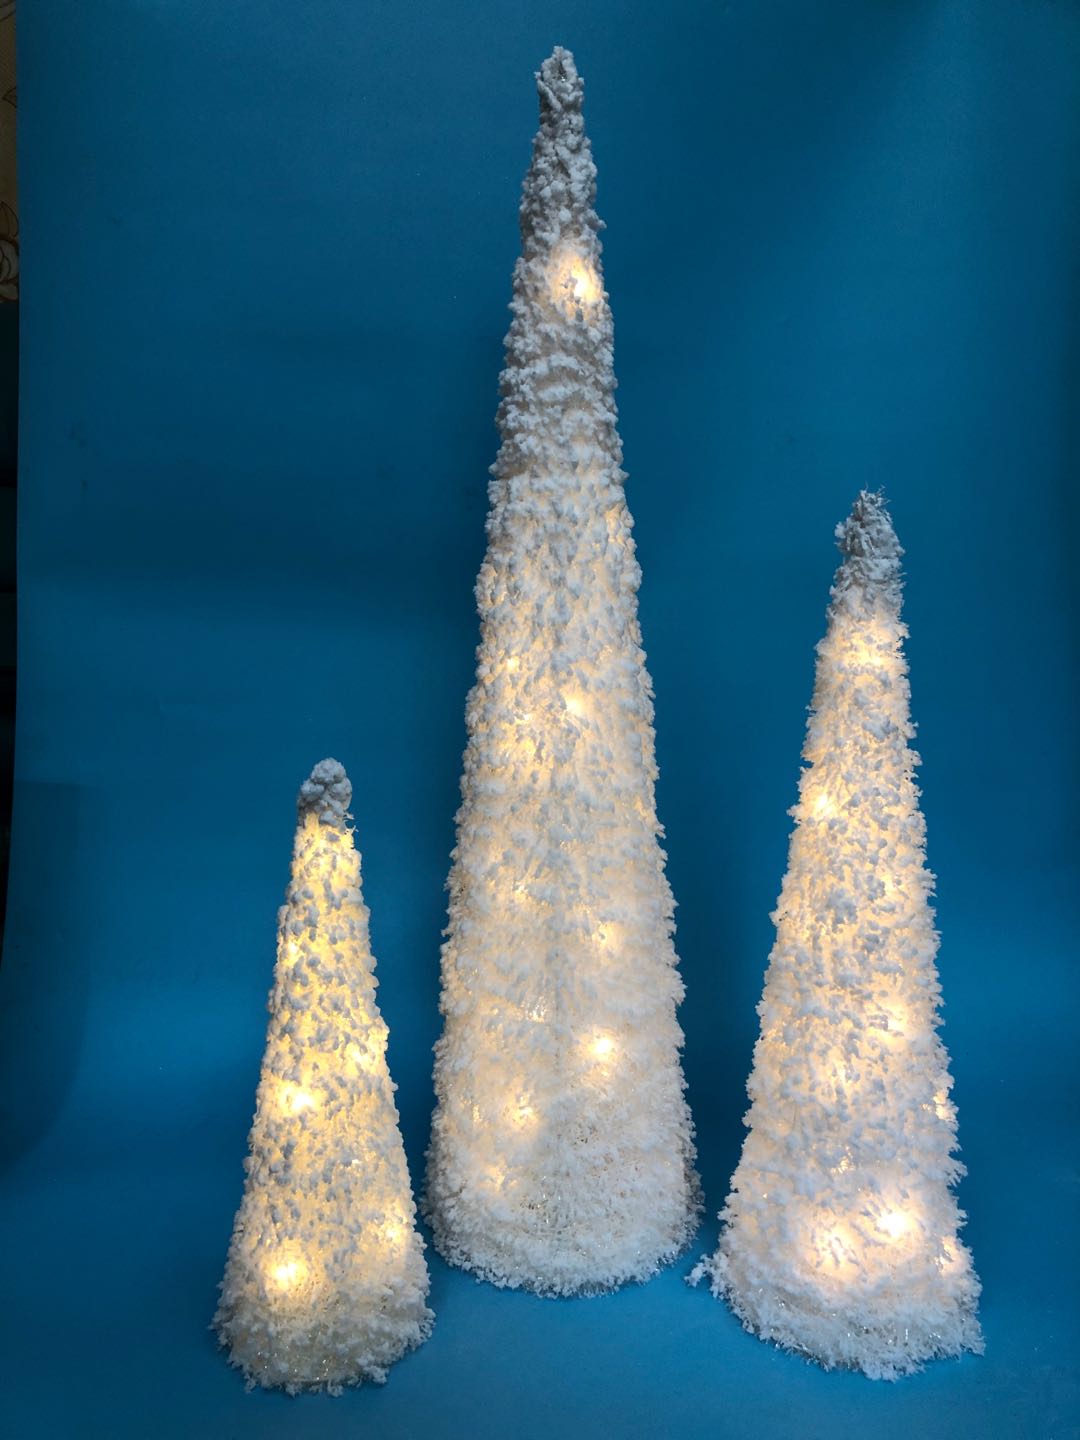 Snowy lighting Christmas tree set for indoor